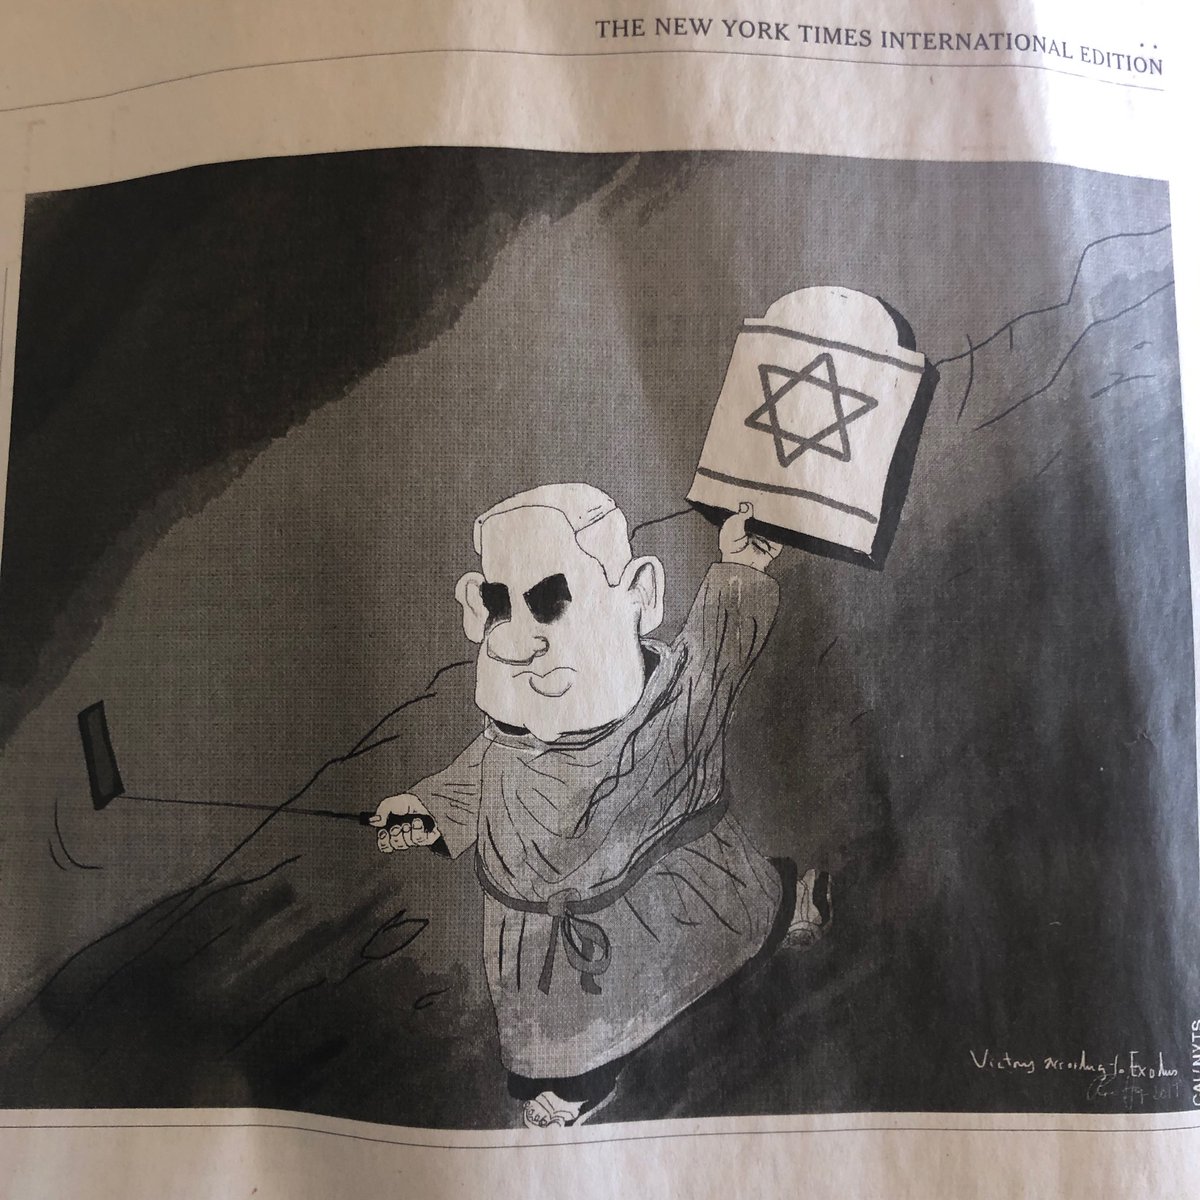 جروزالم‌پست: نیویورک تایمز کاریکاتور ضد یهودی دیگر منتشر کرد!